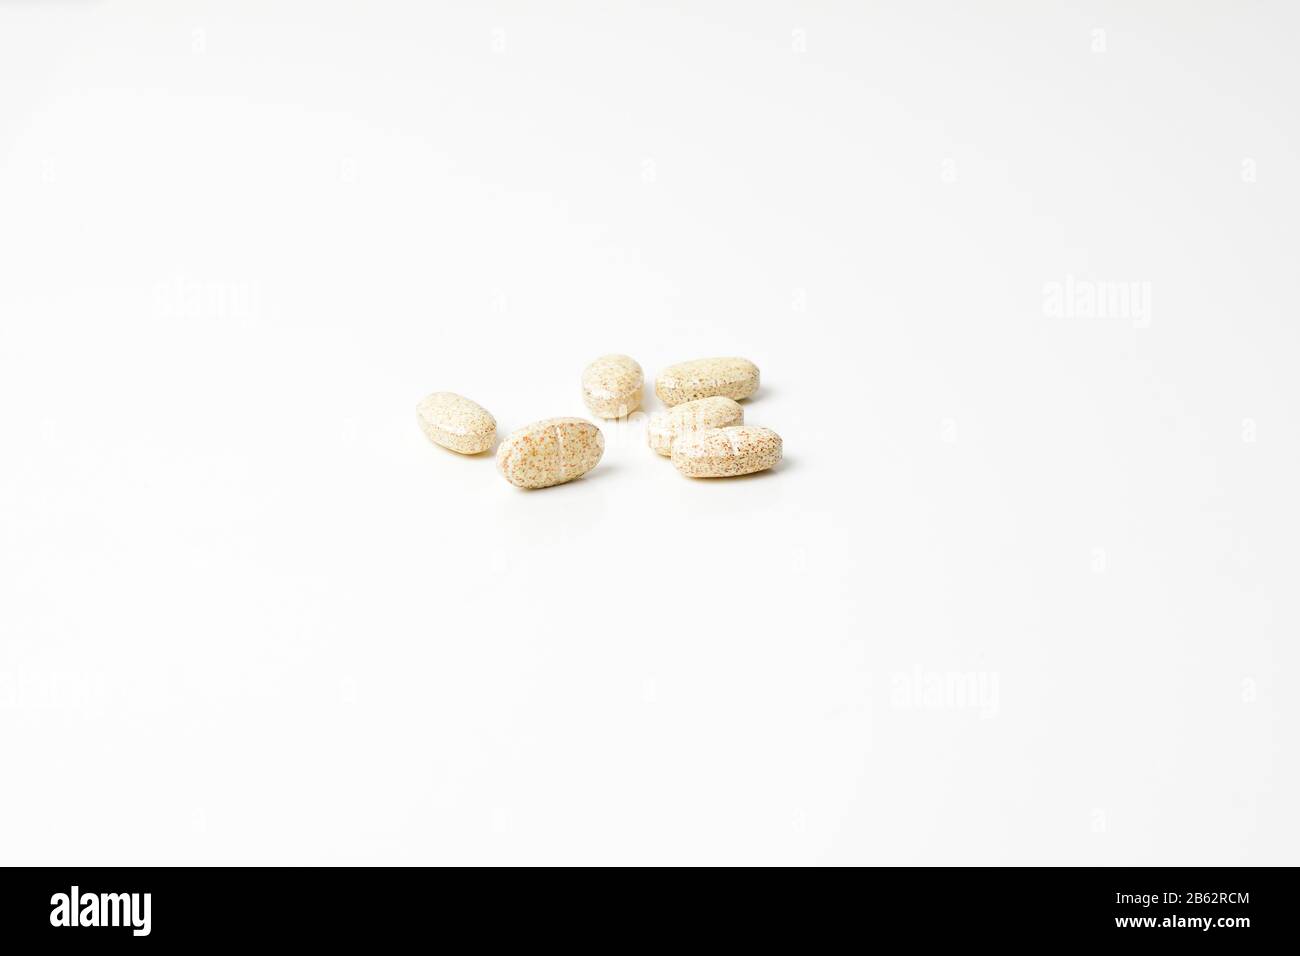 Multivitamin pills on a white background. Stock Photo